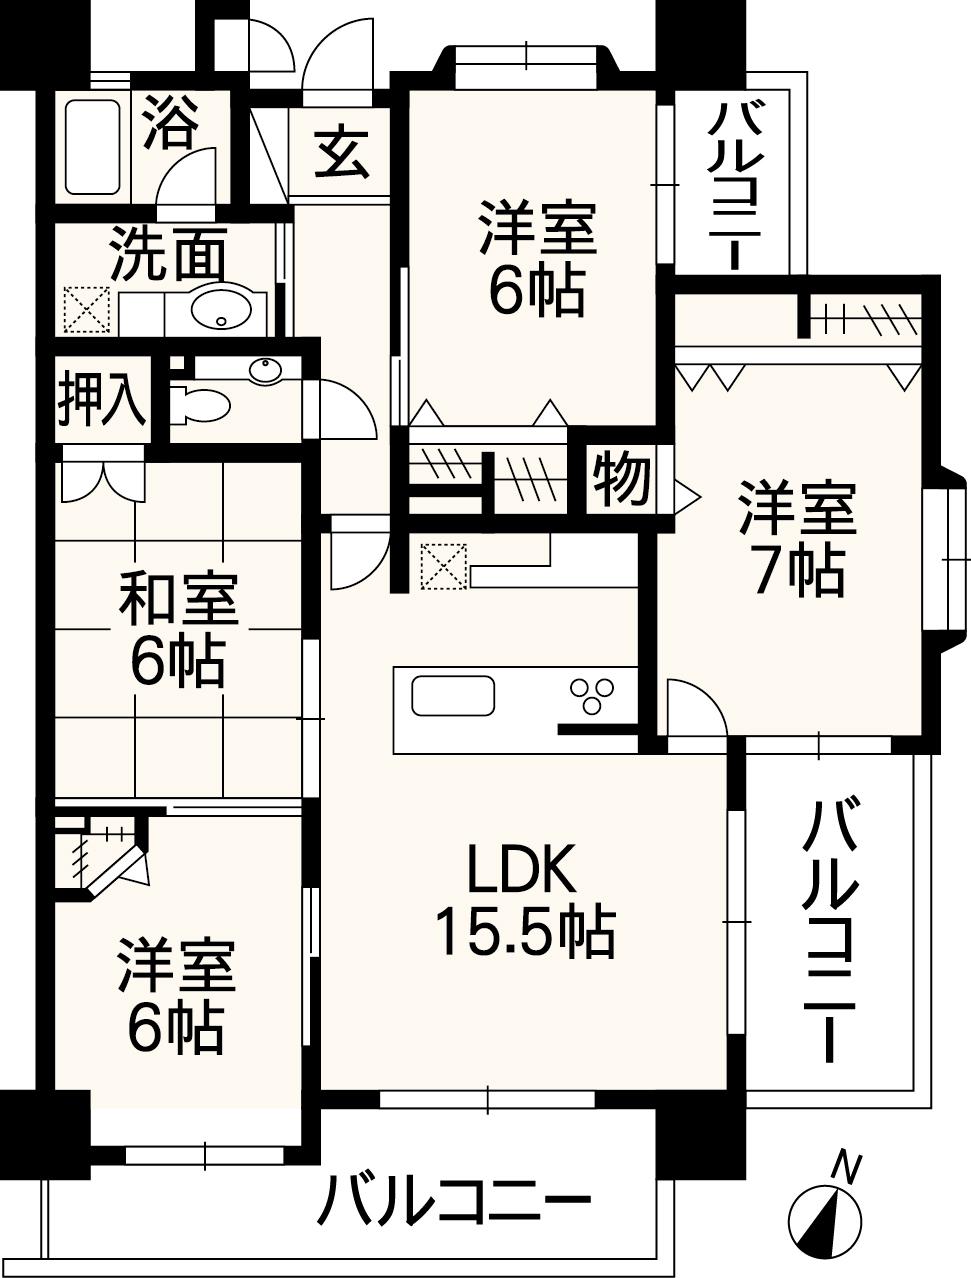 Floor plan. 4LDK, Price 19,800,000 yen, Footprint 86.3 sq m , Balcony area 18.29 sq m